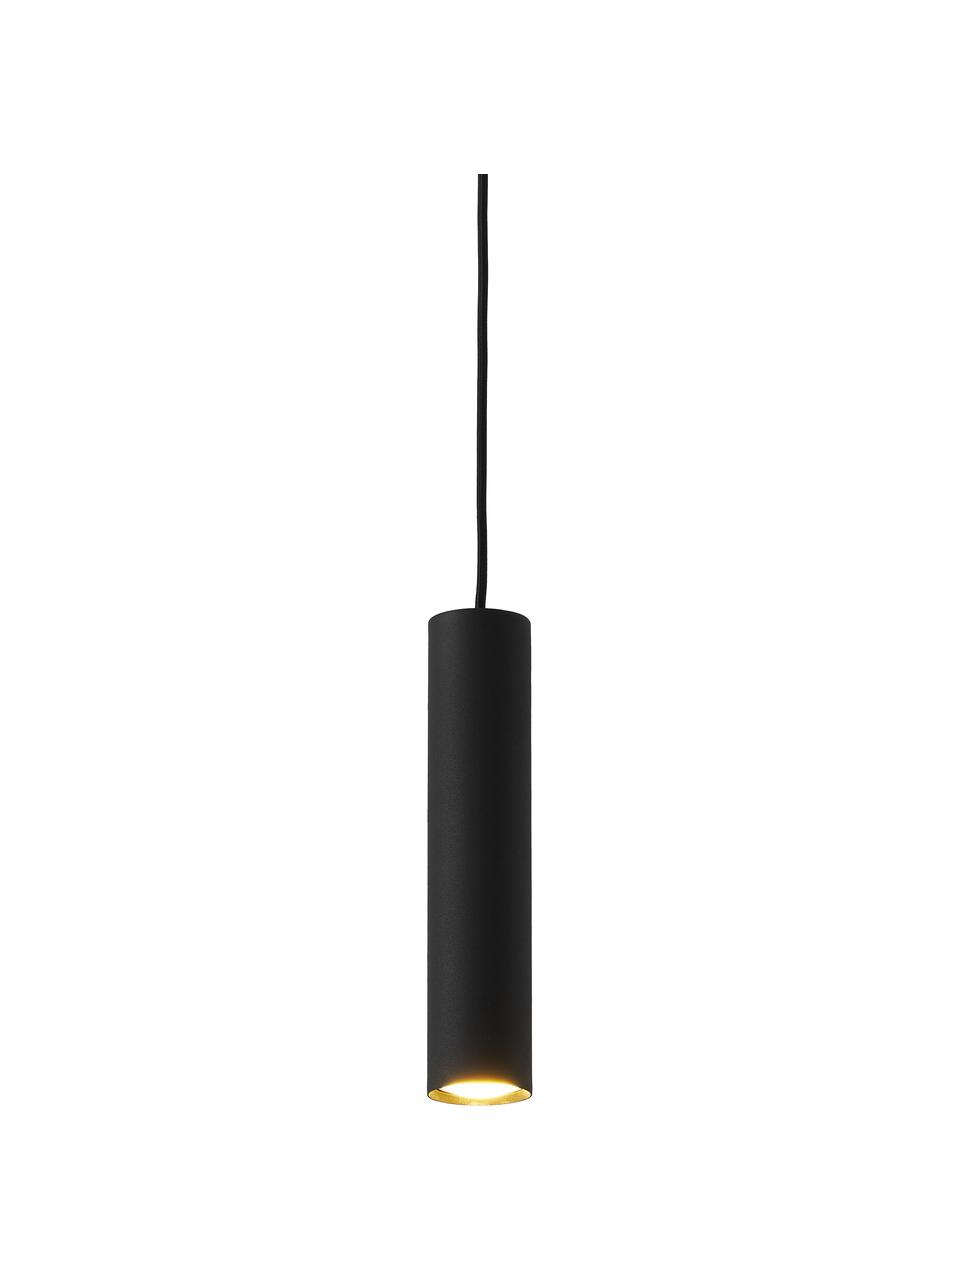 Malé závěsné svítidlo Paris, Černá, Ø 6 cm, V 28 cm